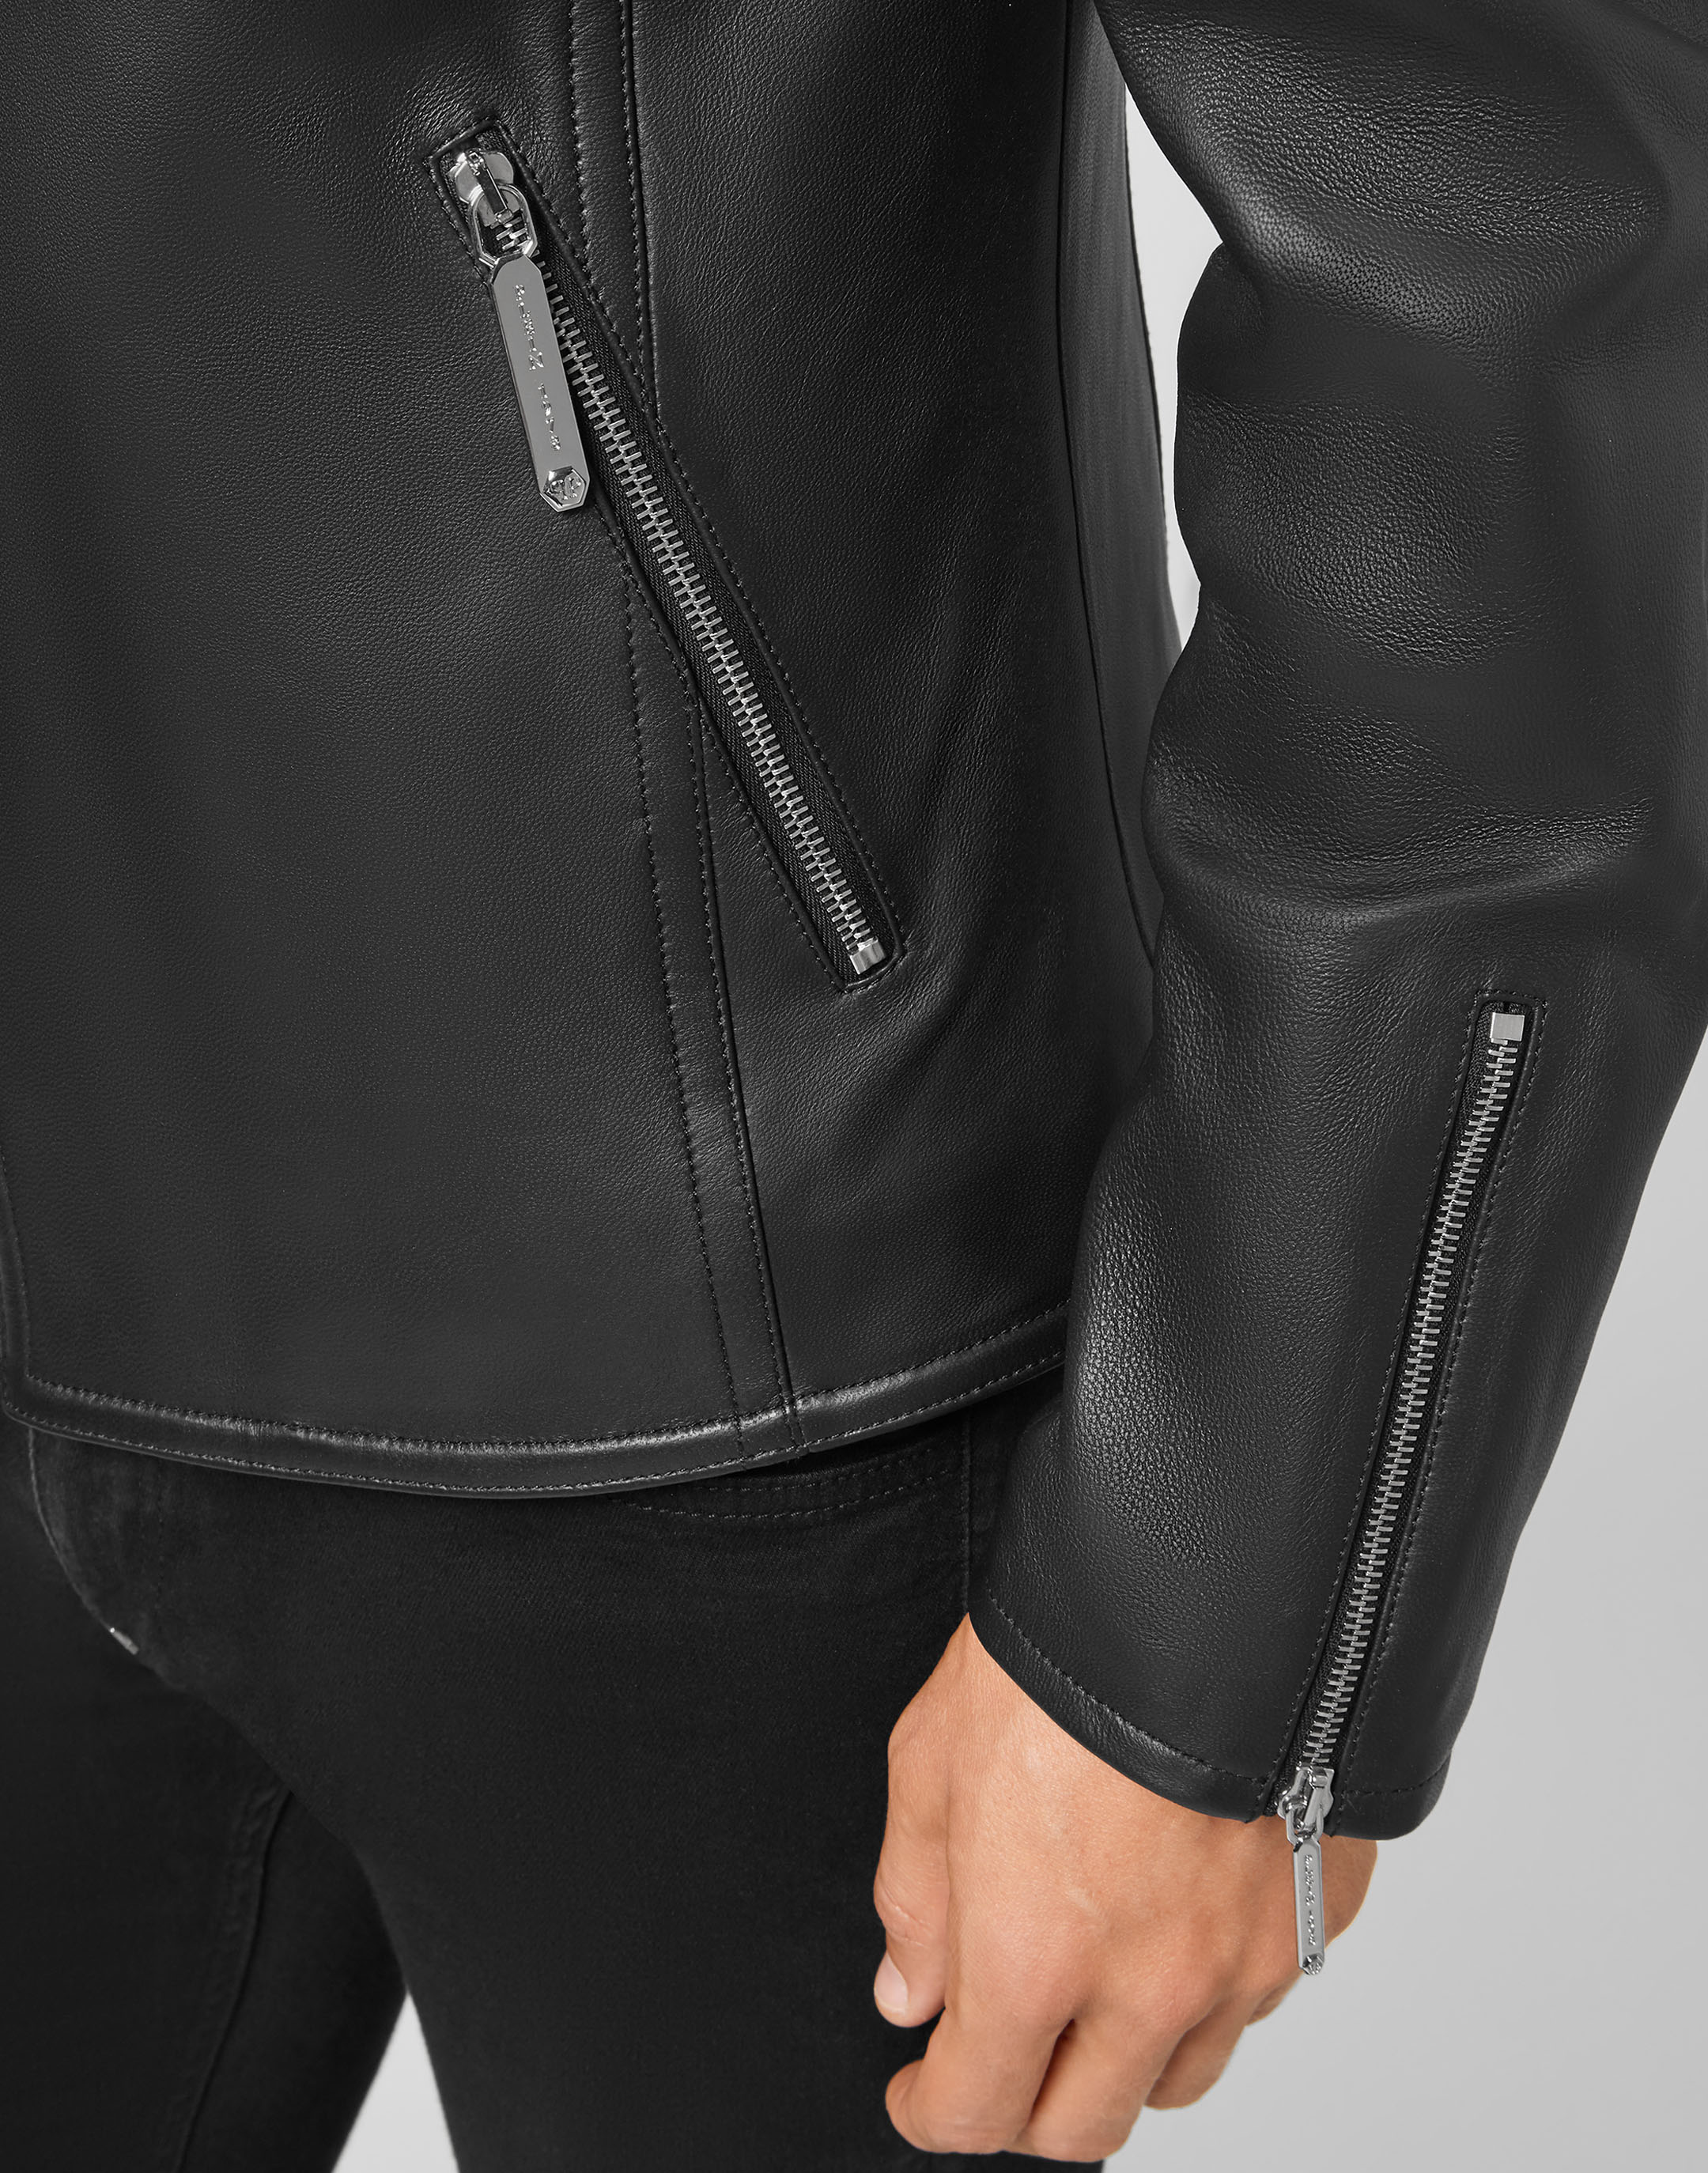 Biker Leather Jacket | Philipp Plein Outlet